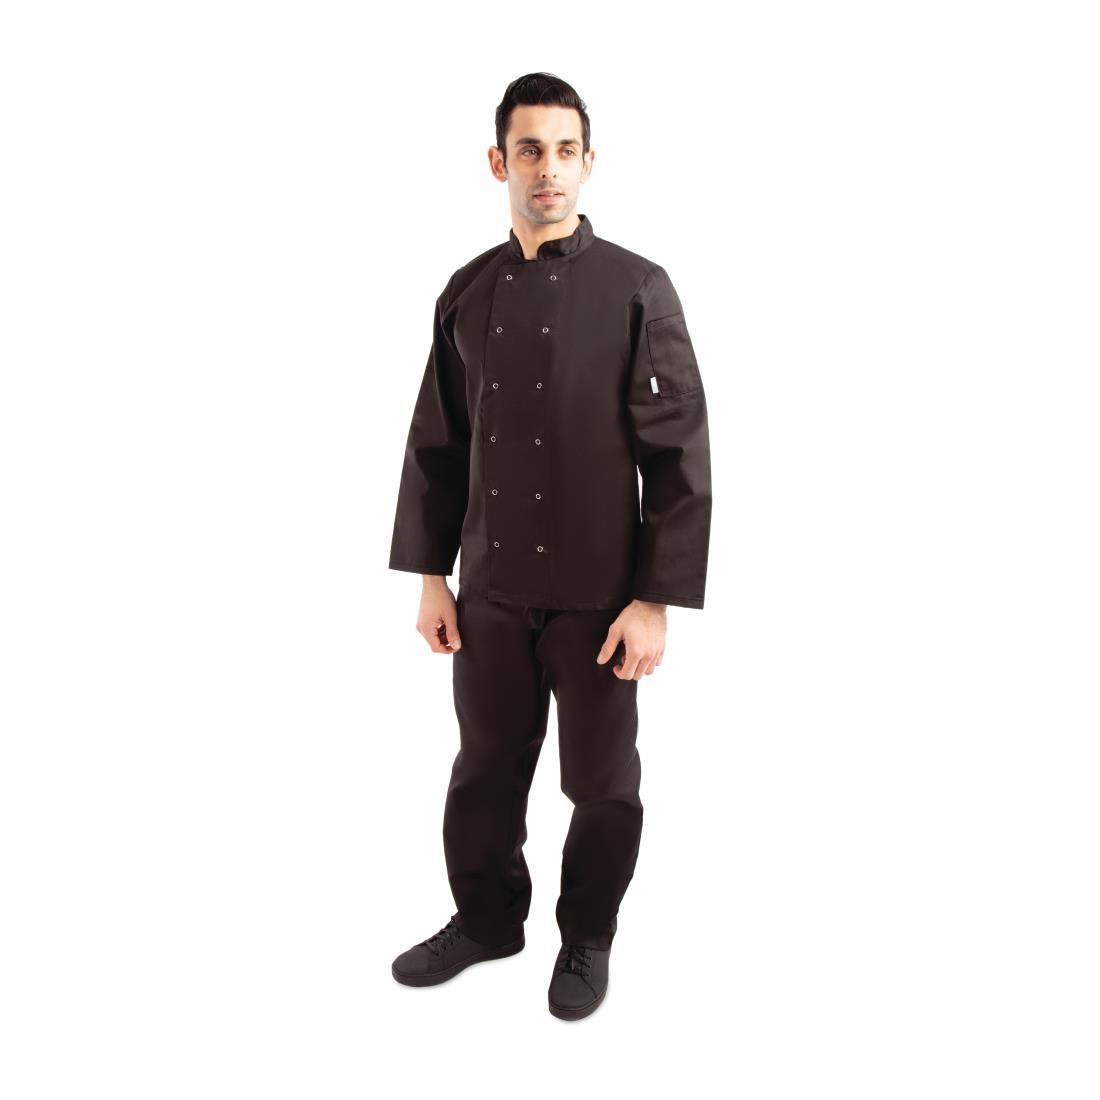 Whites Vegas Unisex Chefs Jacket Long Sleeve Black S - A438-S  - 7